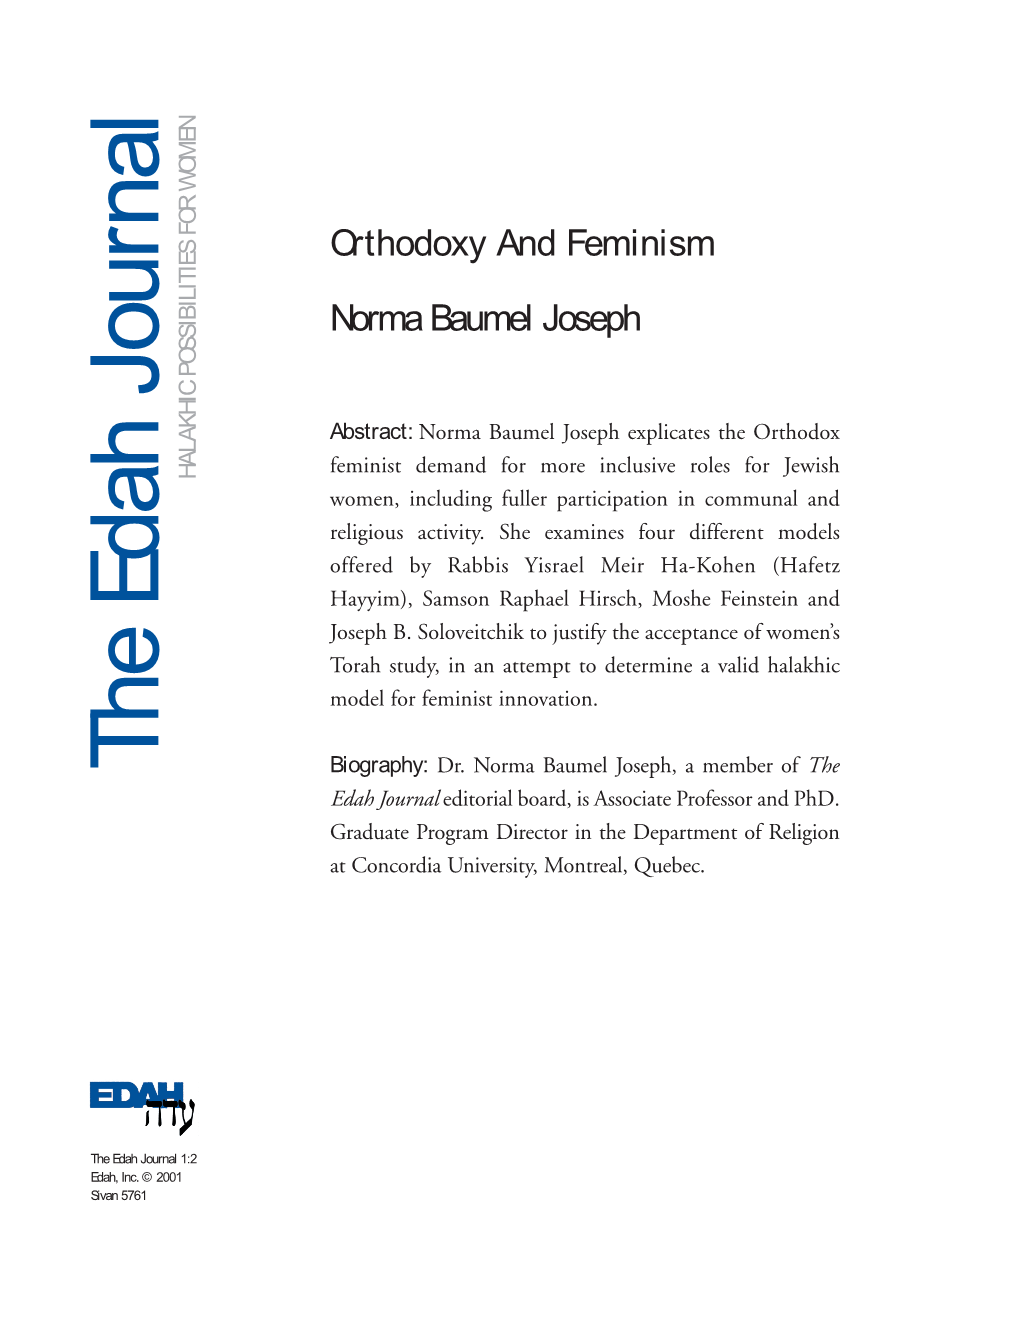 Orthodoxy and Feminism